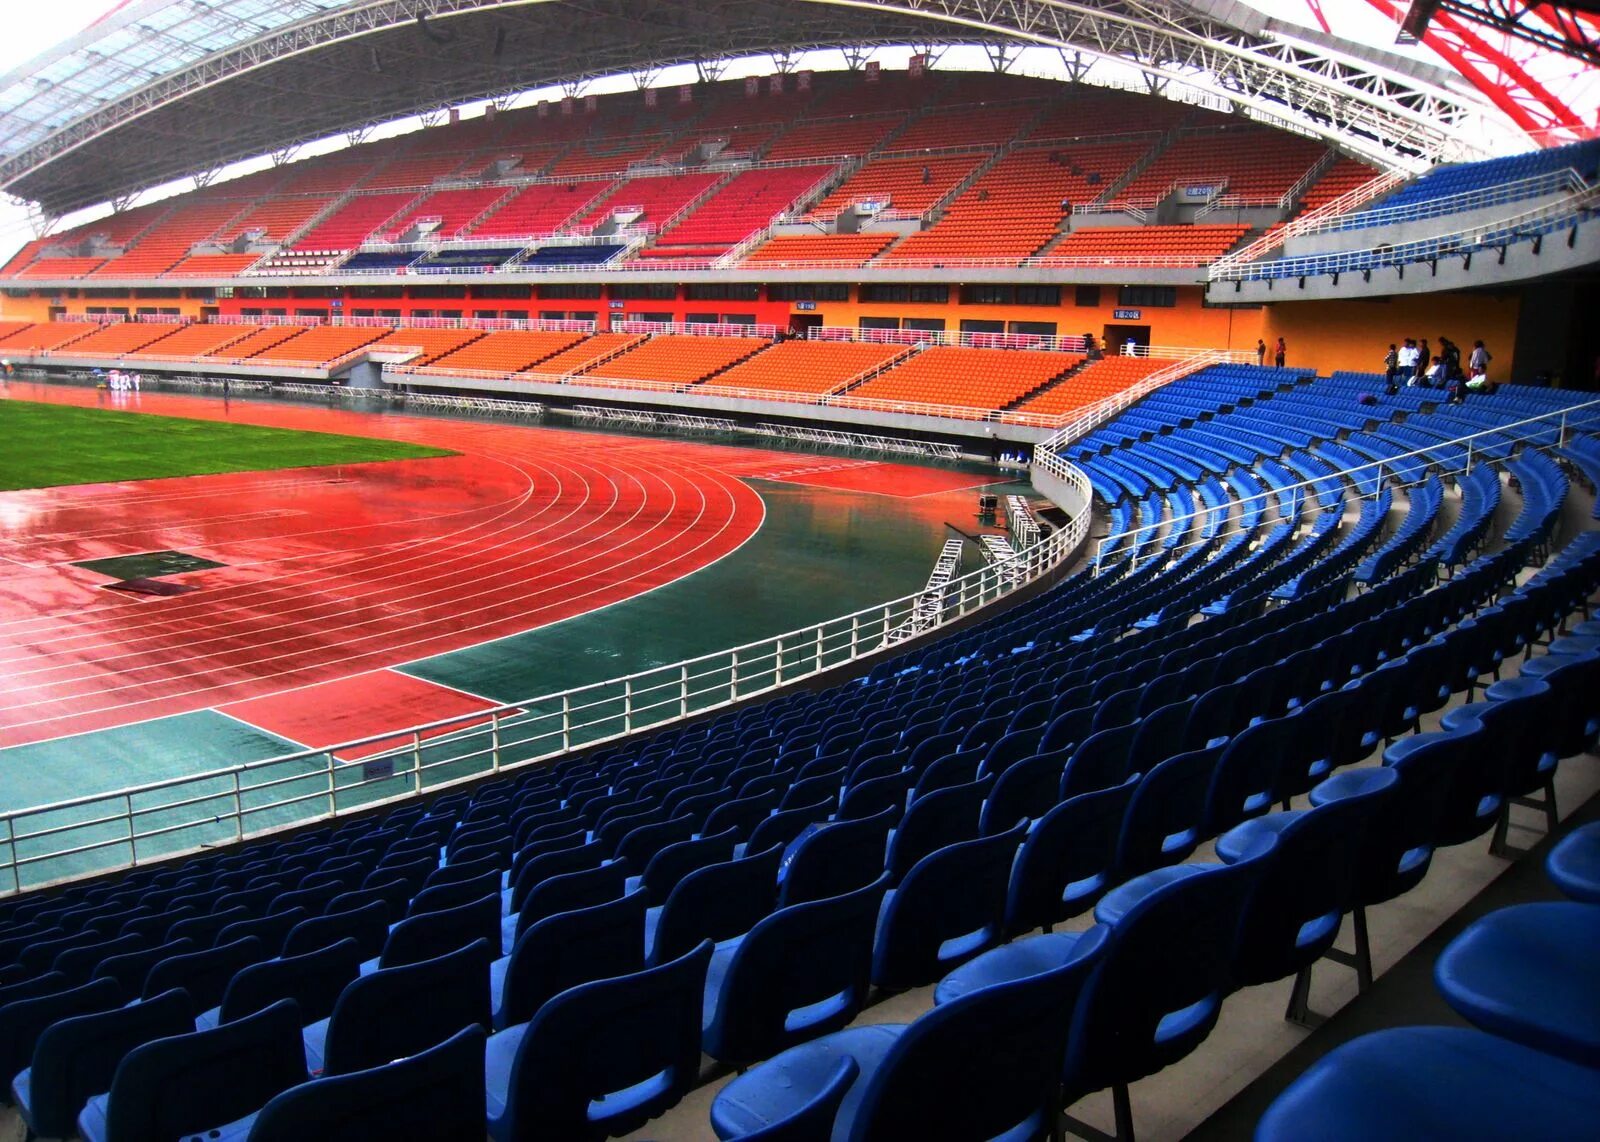 Center stadium. Zibo Sports Center Stadium. Huangpu Sports Center Stadium. Стадион казино. Стадион олимпийского спорткомплекса города Циньхуандао.